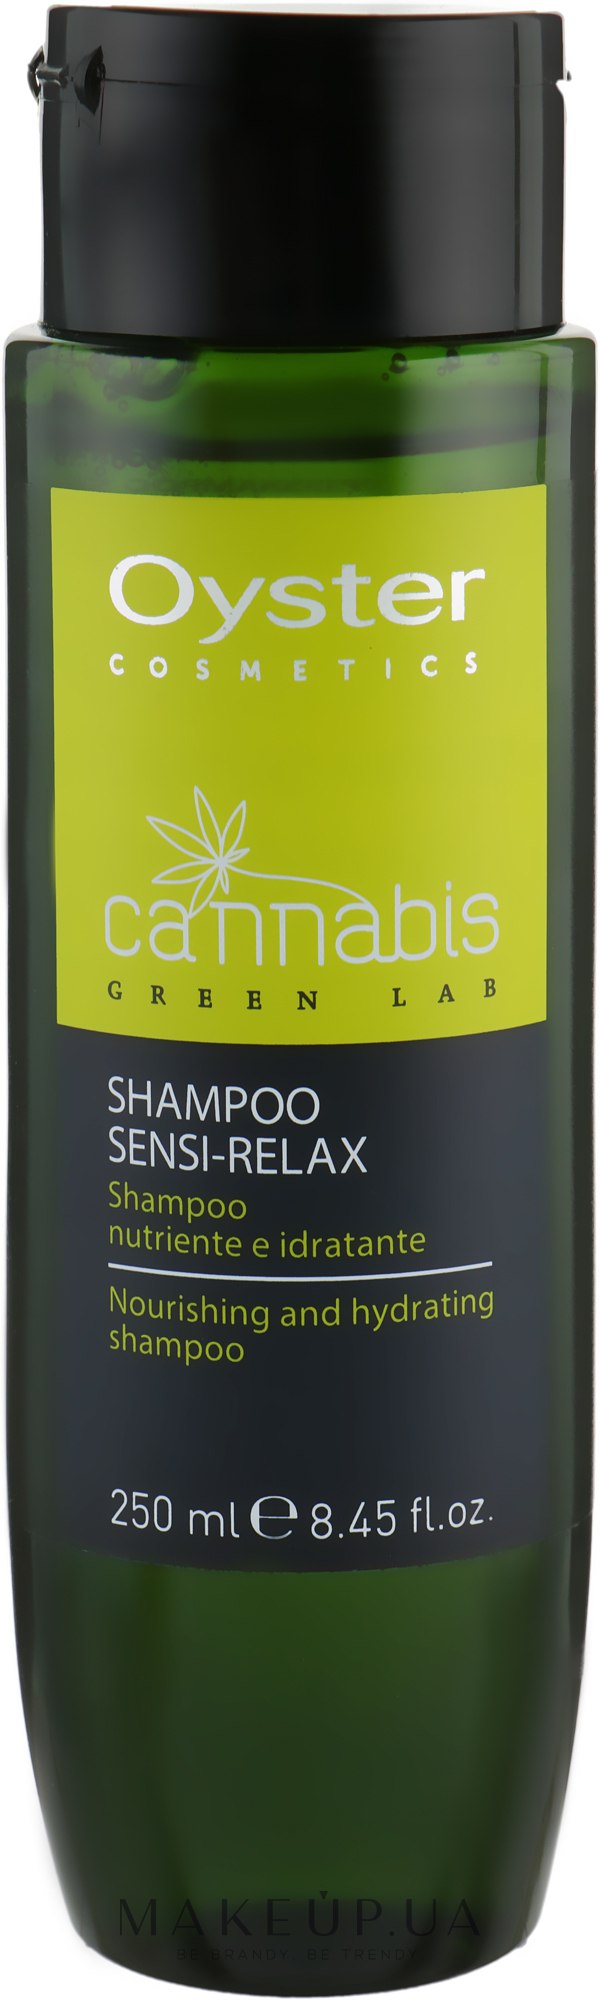 Шампунь для волос с каннабисом без SLES и парабенов - Oyster Cosmetics Cannabis Green Lab Shampoo Sensi-Relax — фото 250ml